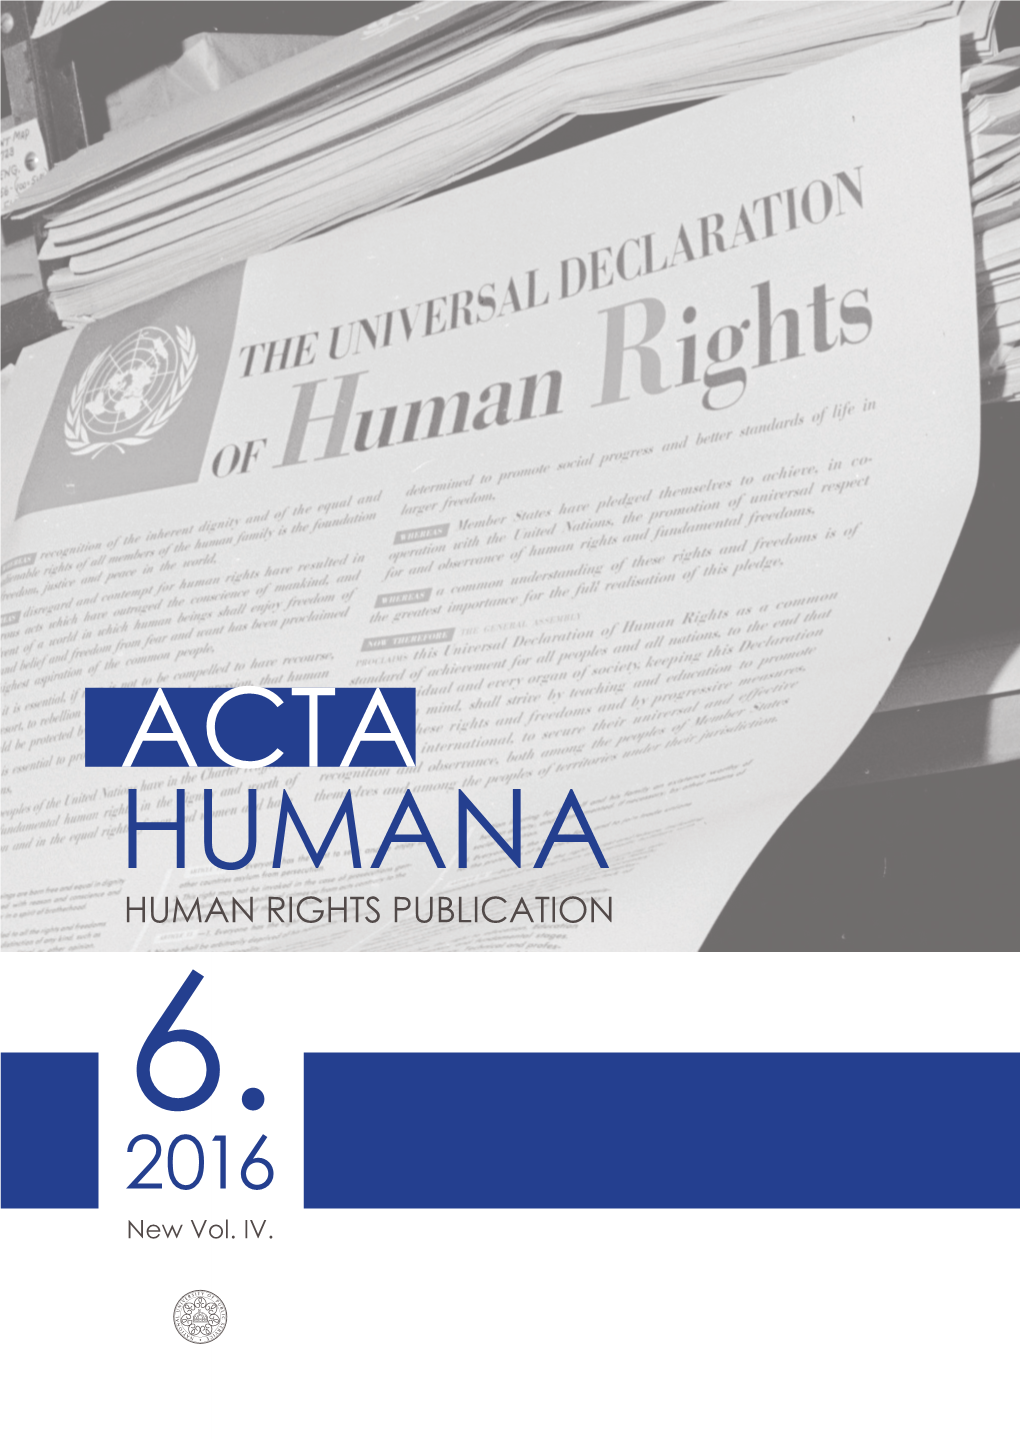 Acta Humana Human Rights Publication